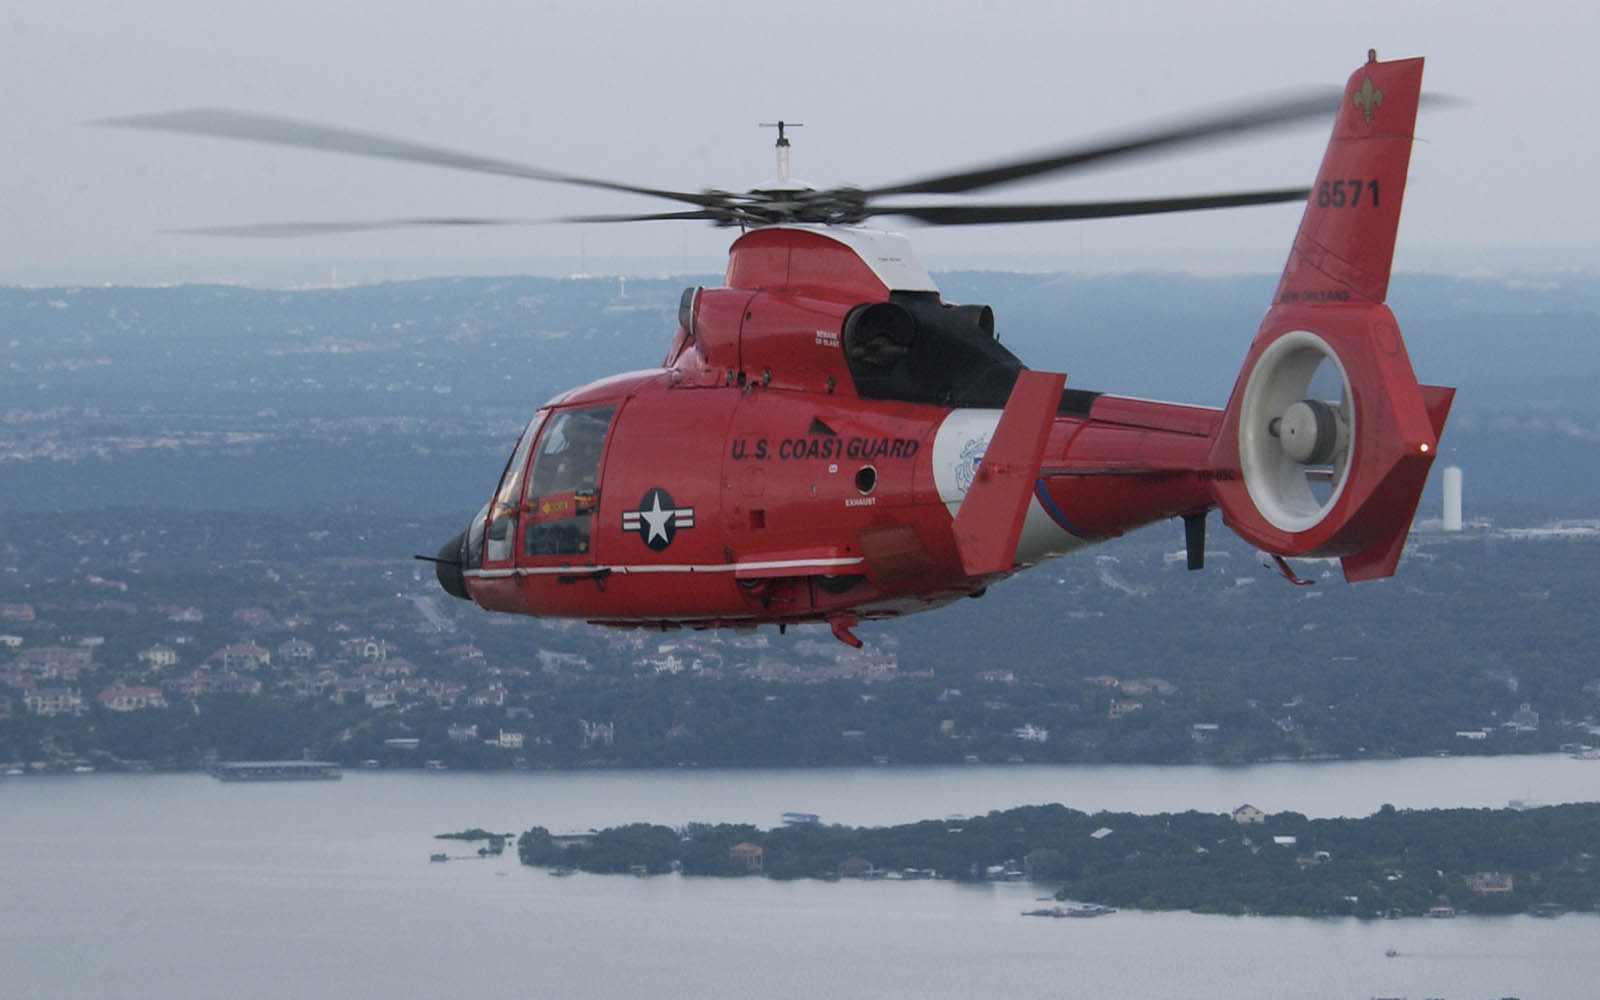 Us Coast Guard Helicopter Wallpaper Desktop Online